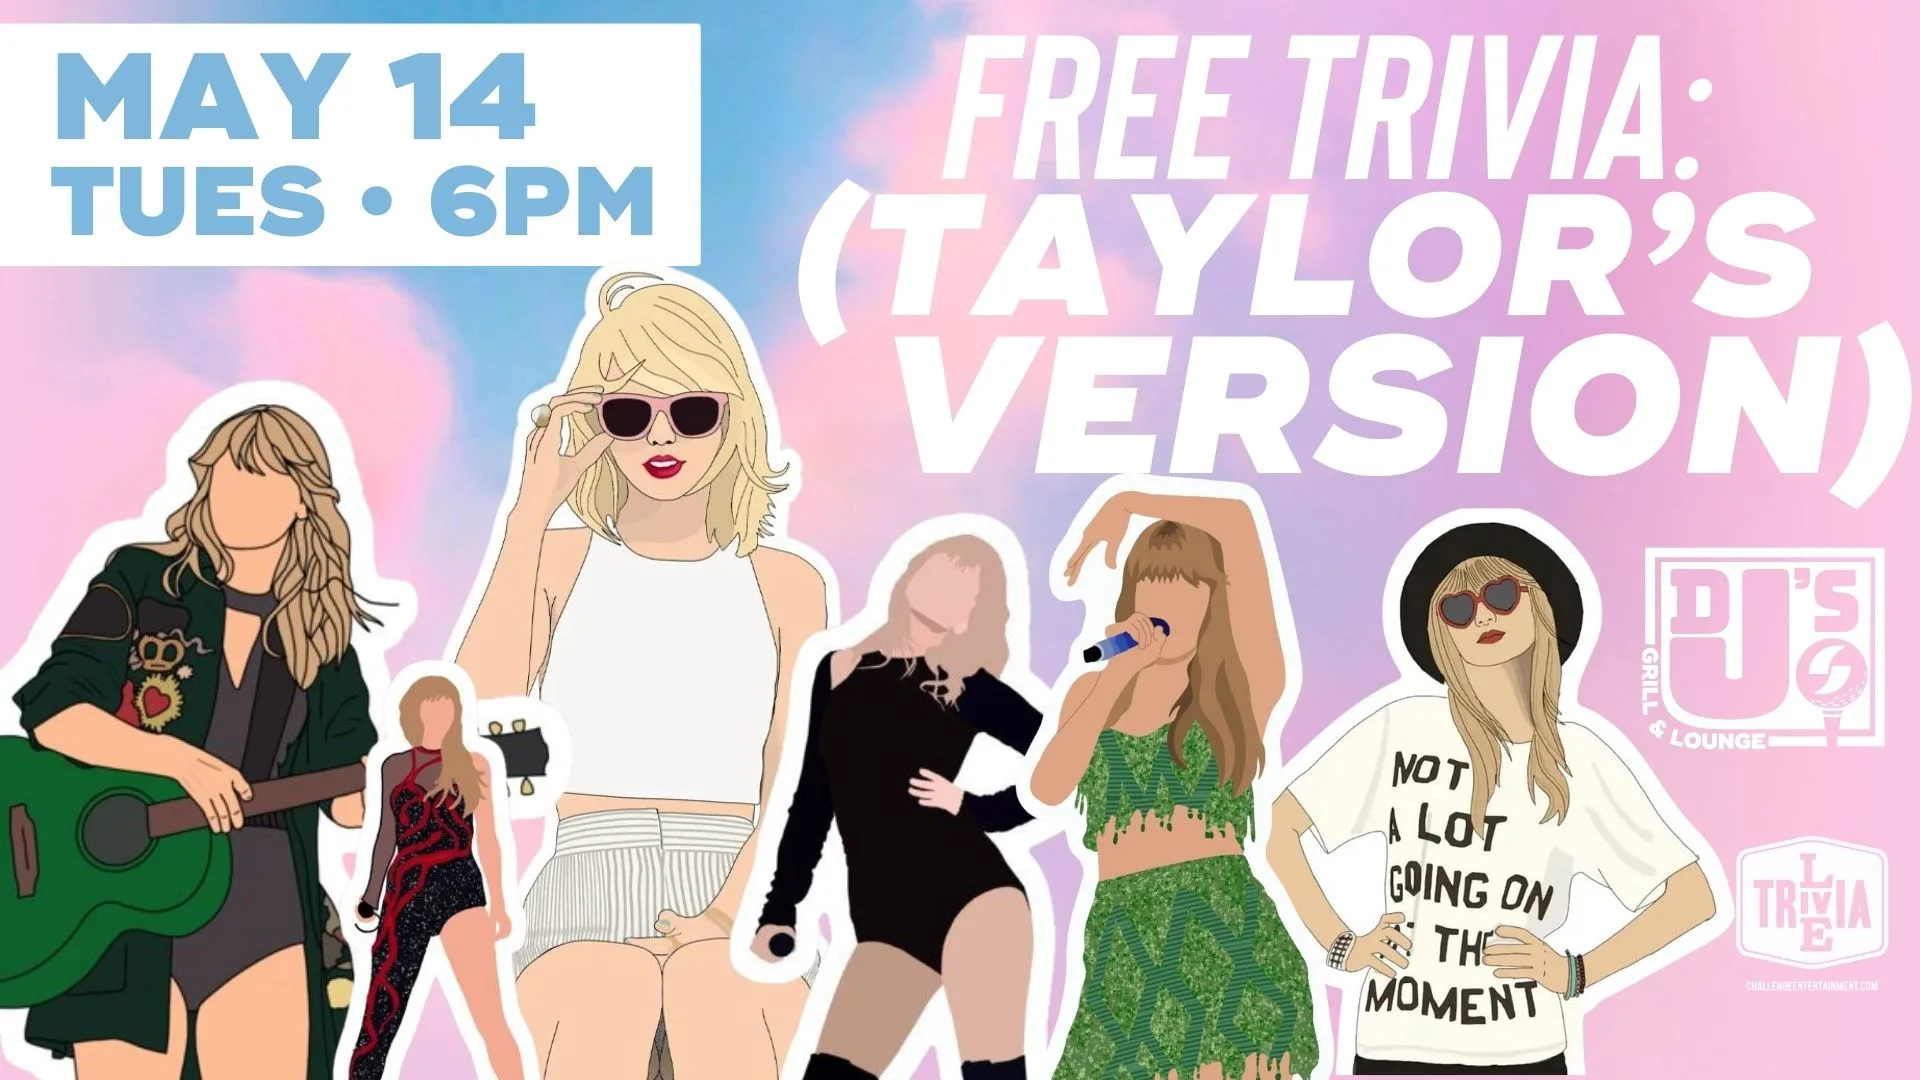 FREE Trivia: Taylor’s Version